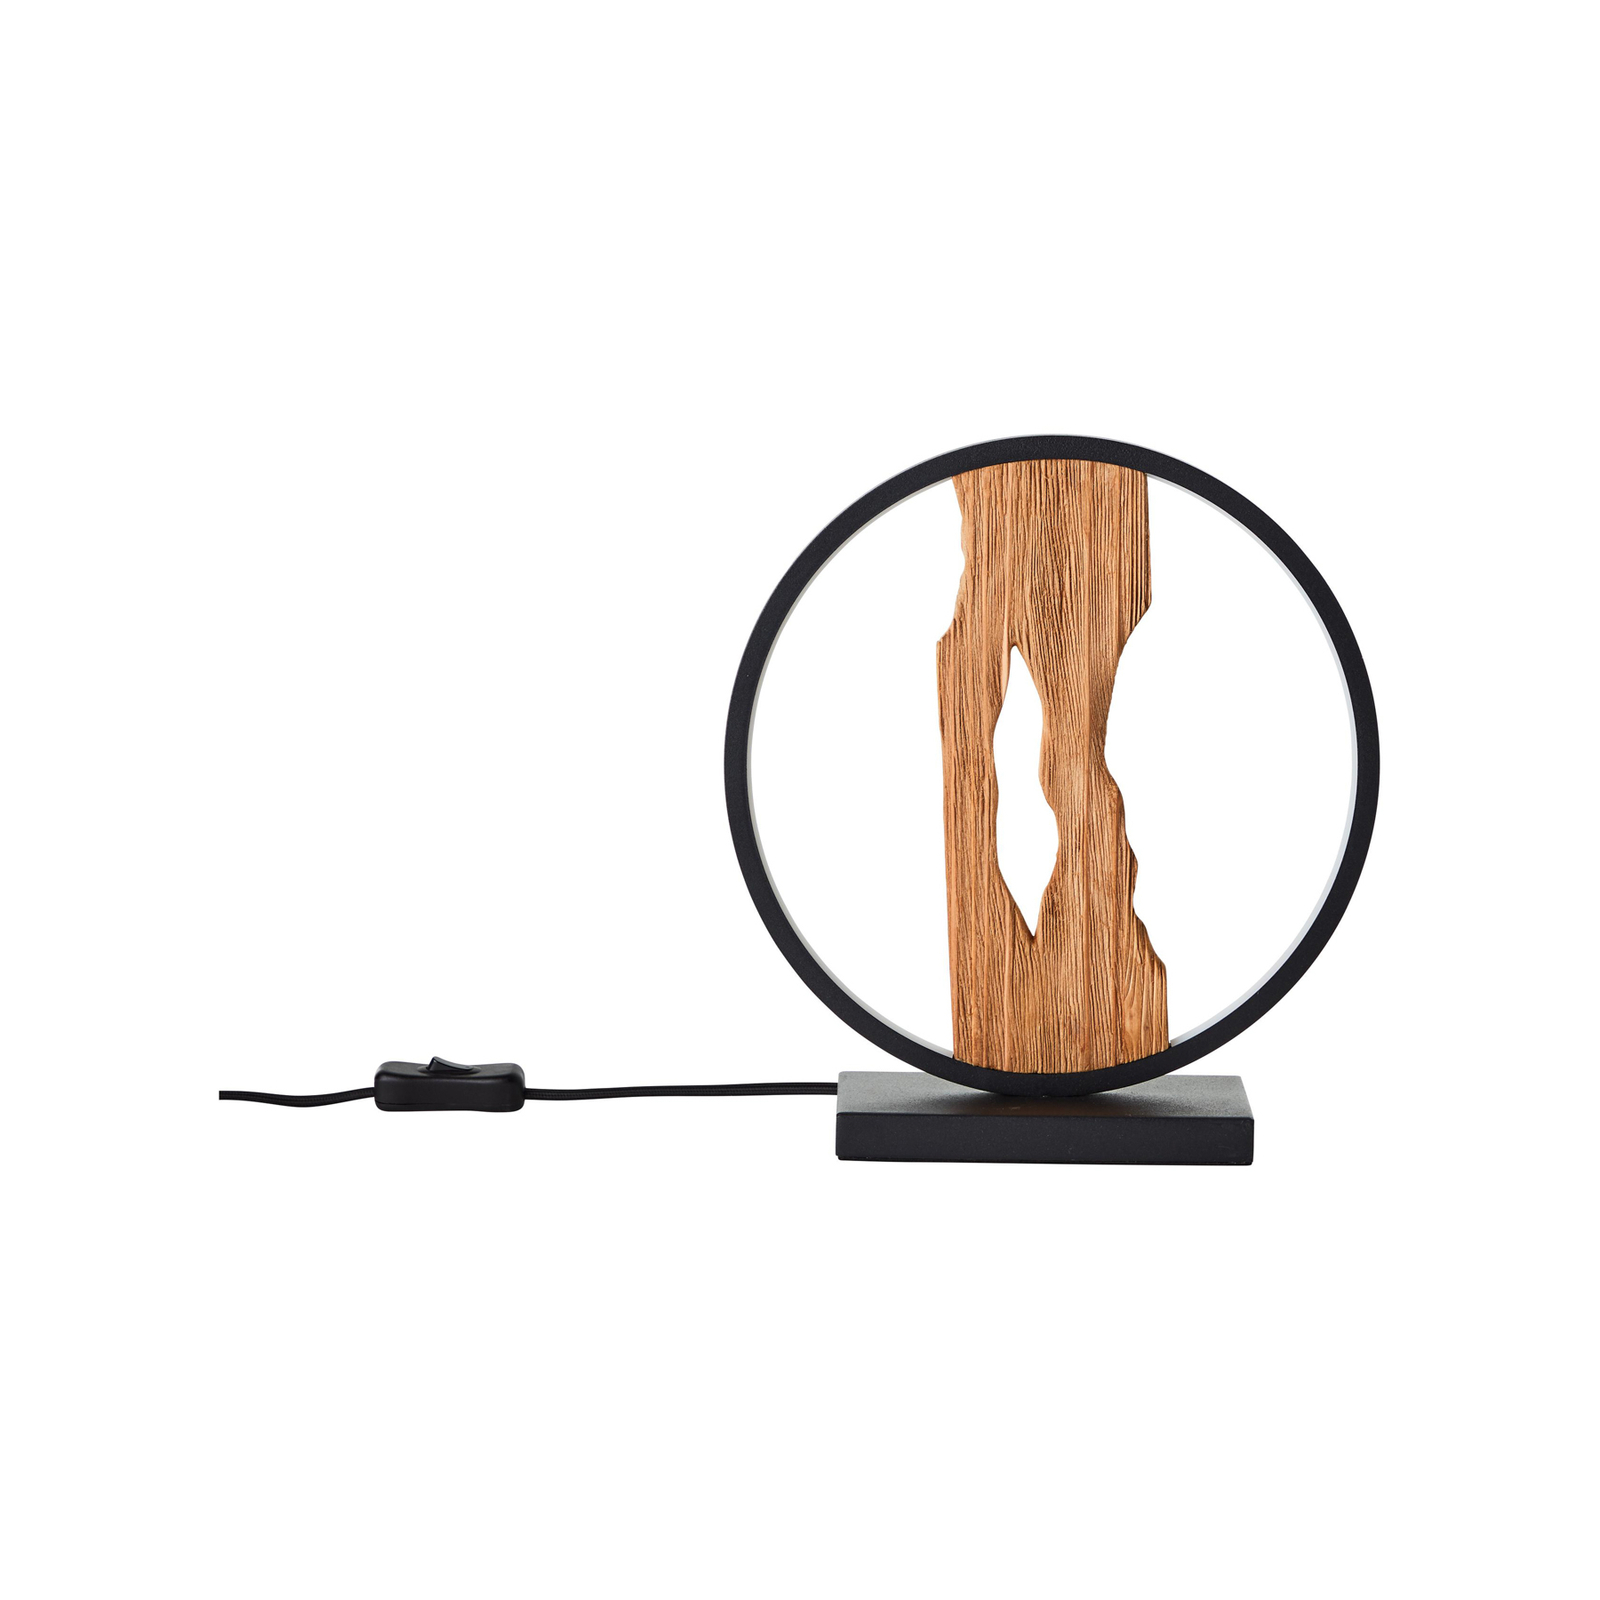 LED tafellamp Chaumont, lengte 25,8 cm, zwart/hout lichtkleurig